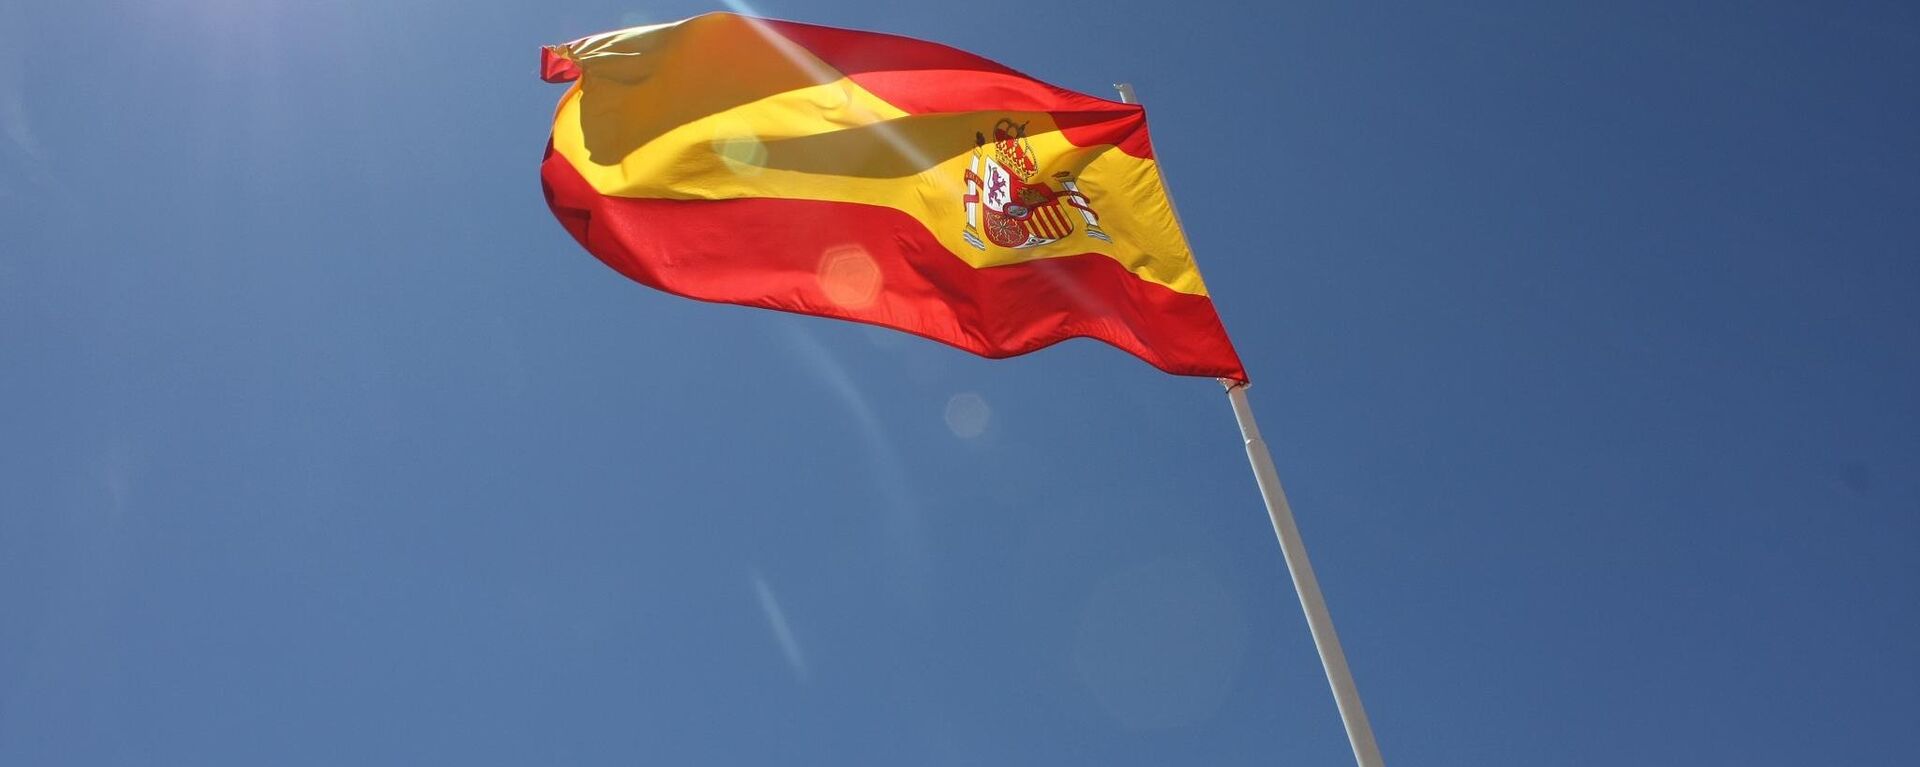 Bandera de España - Sputnik Mundo, 1920, 26.03.2019